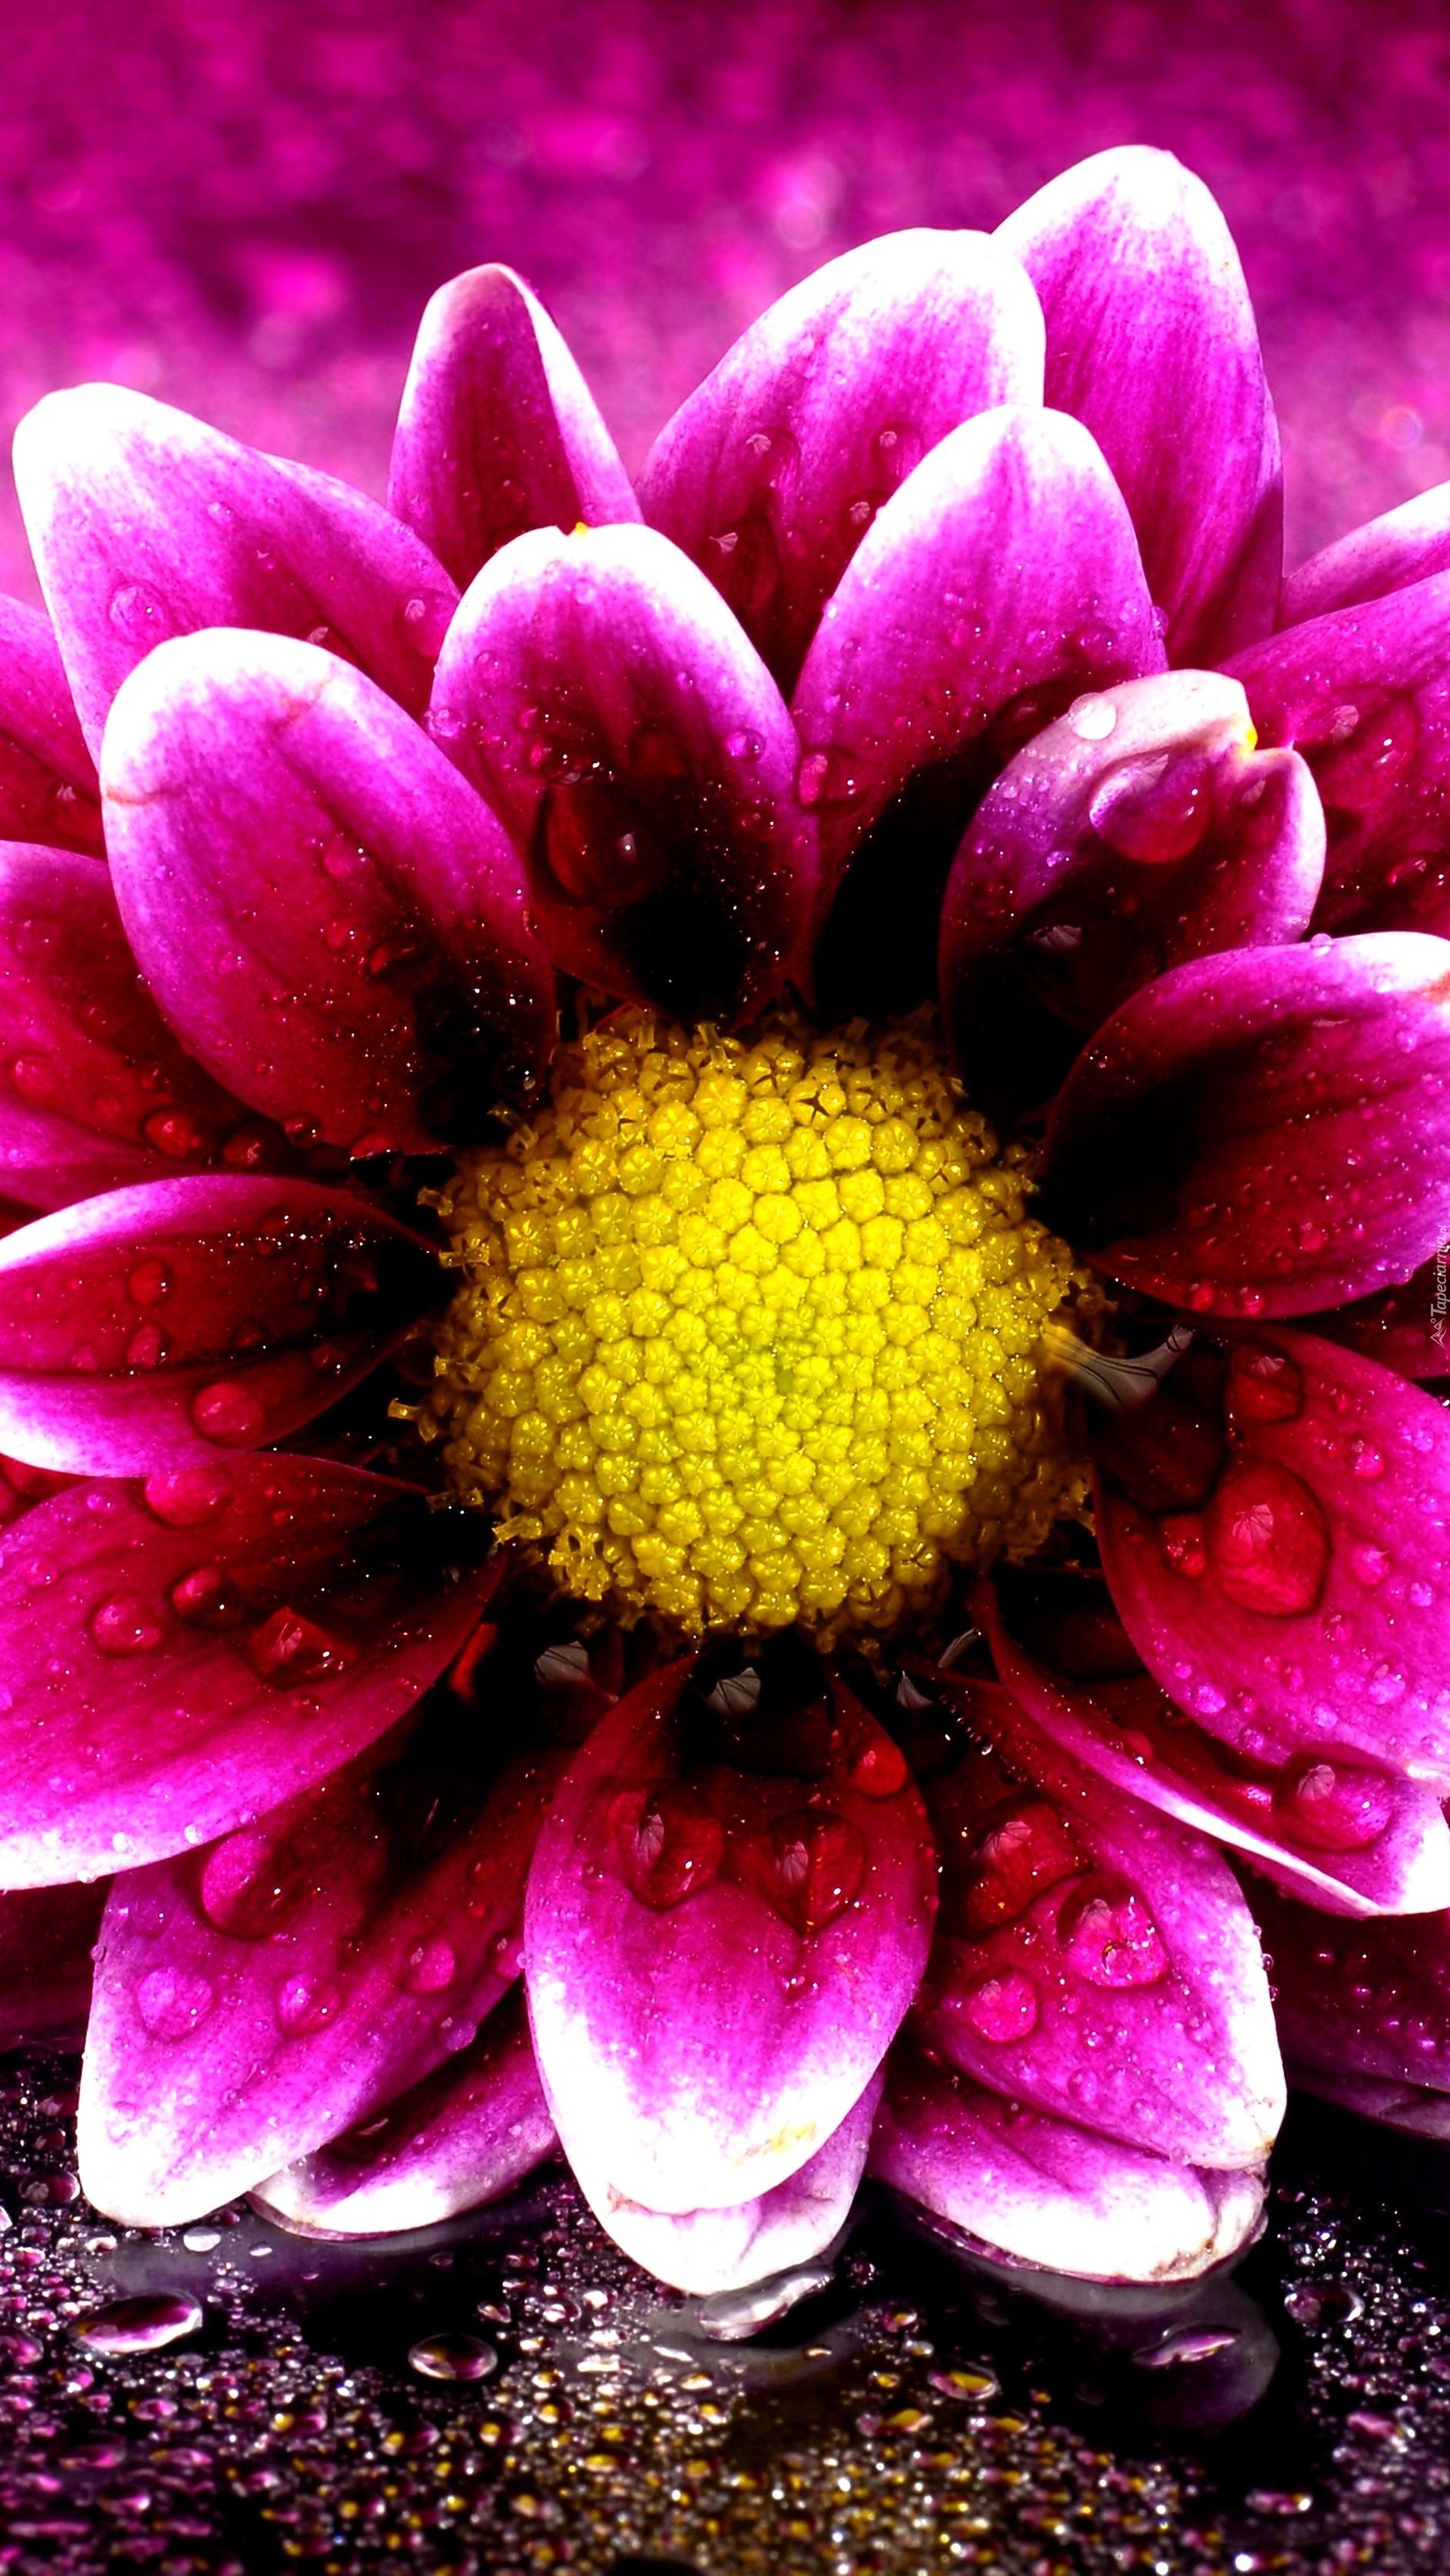 Purpurowy kwiat w kroplach